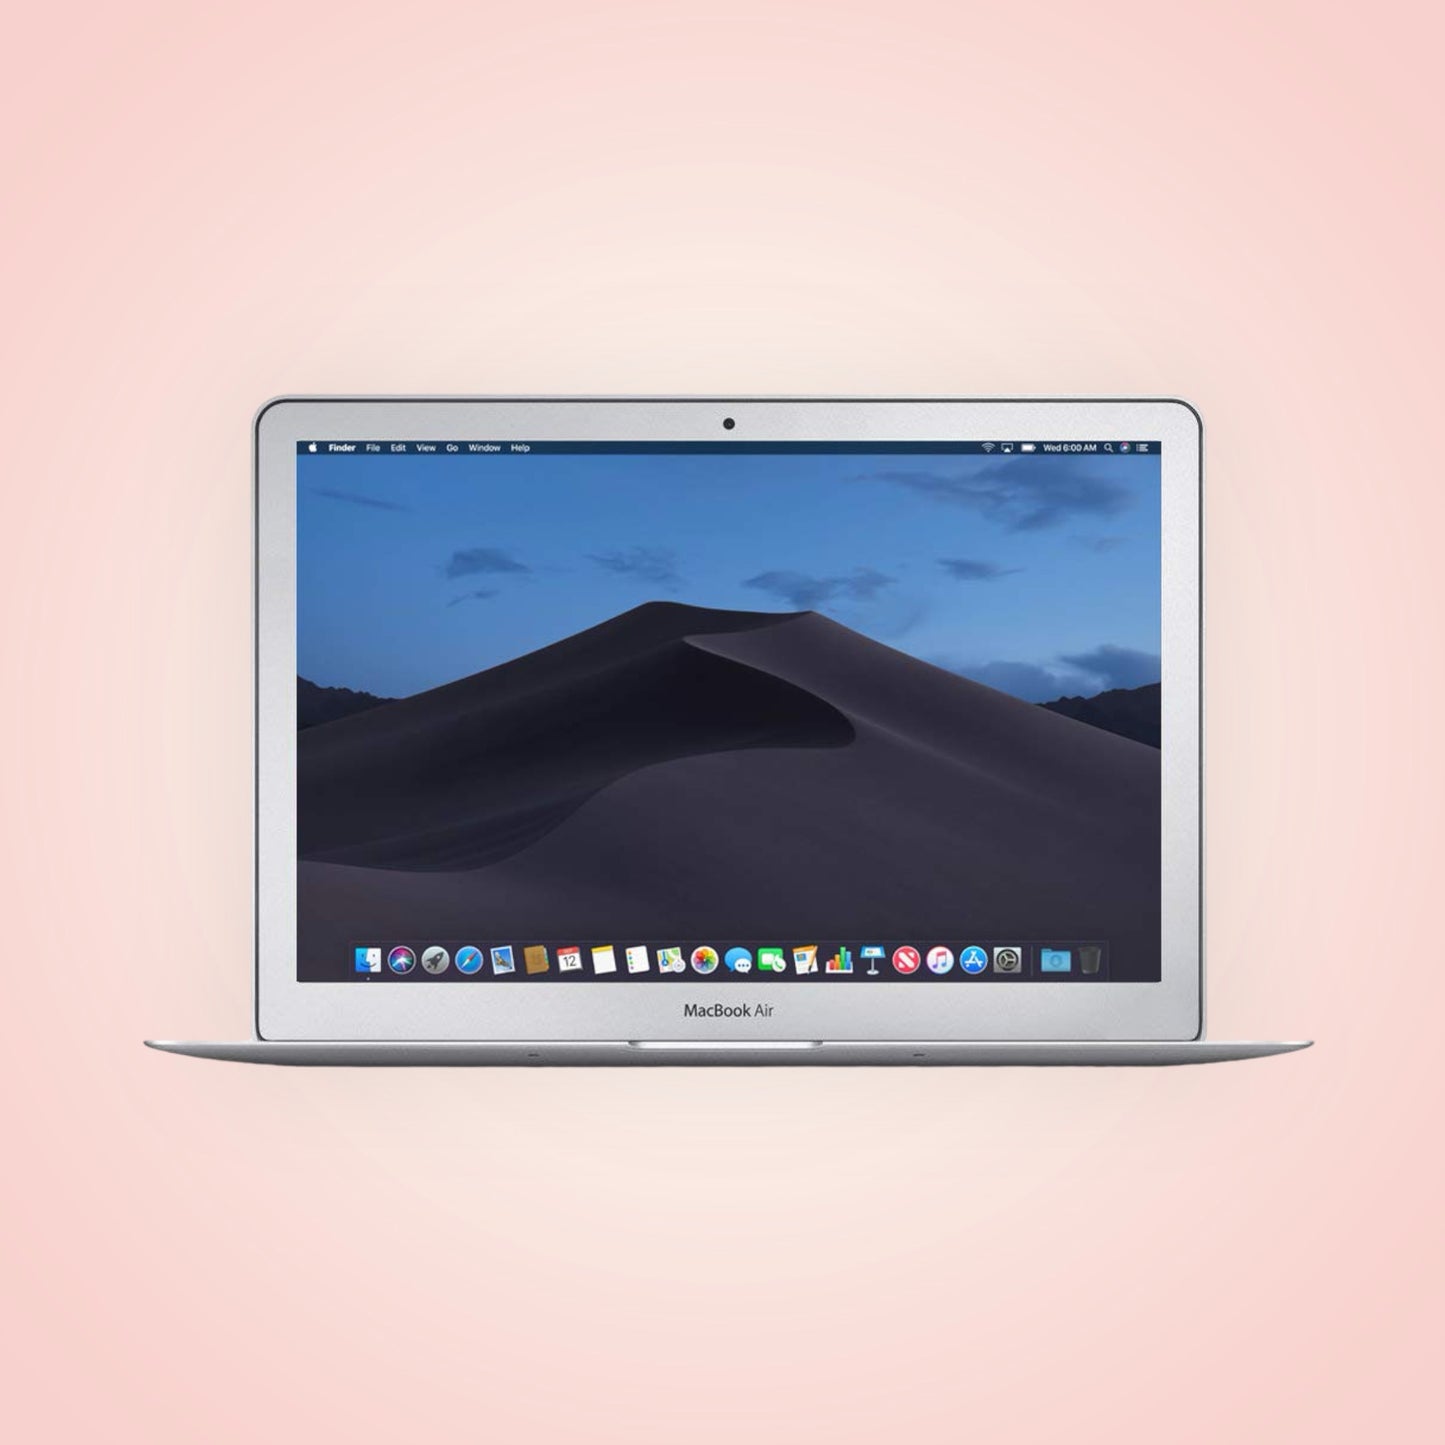 MacBook Air (Retina, 13-inch, Early 2014) - 128GB SSD